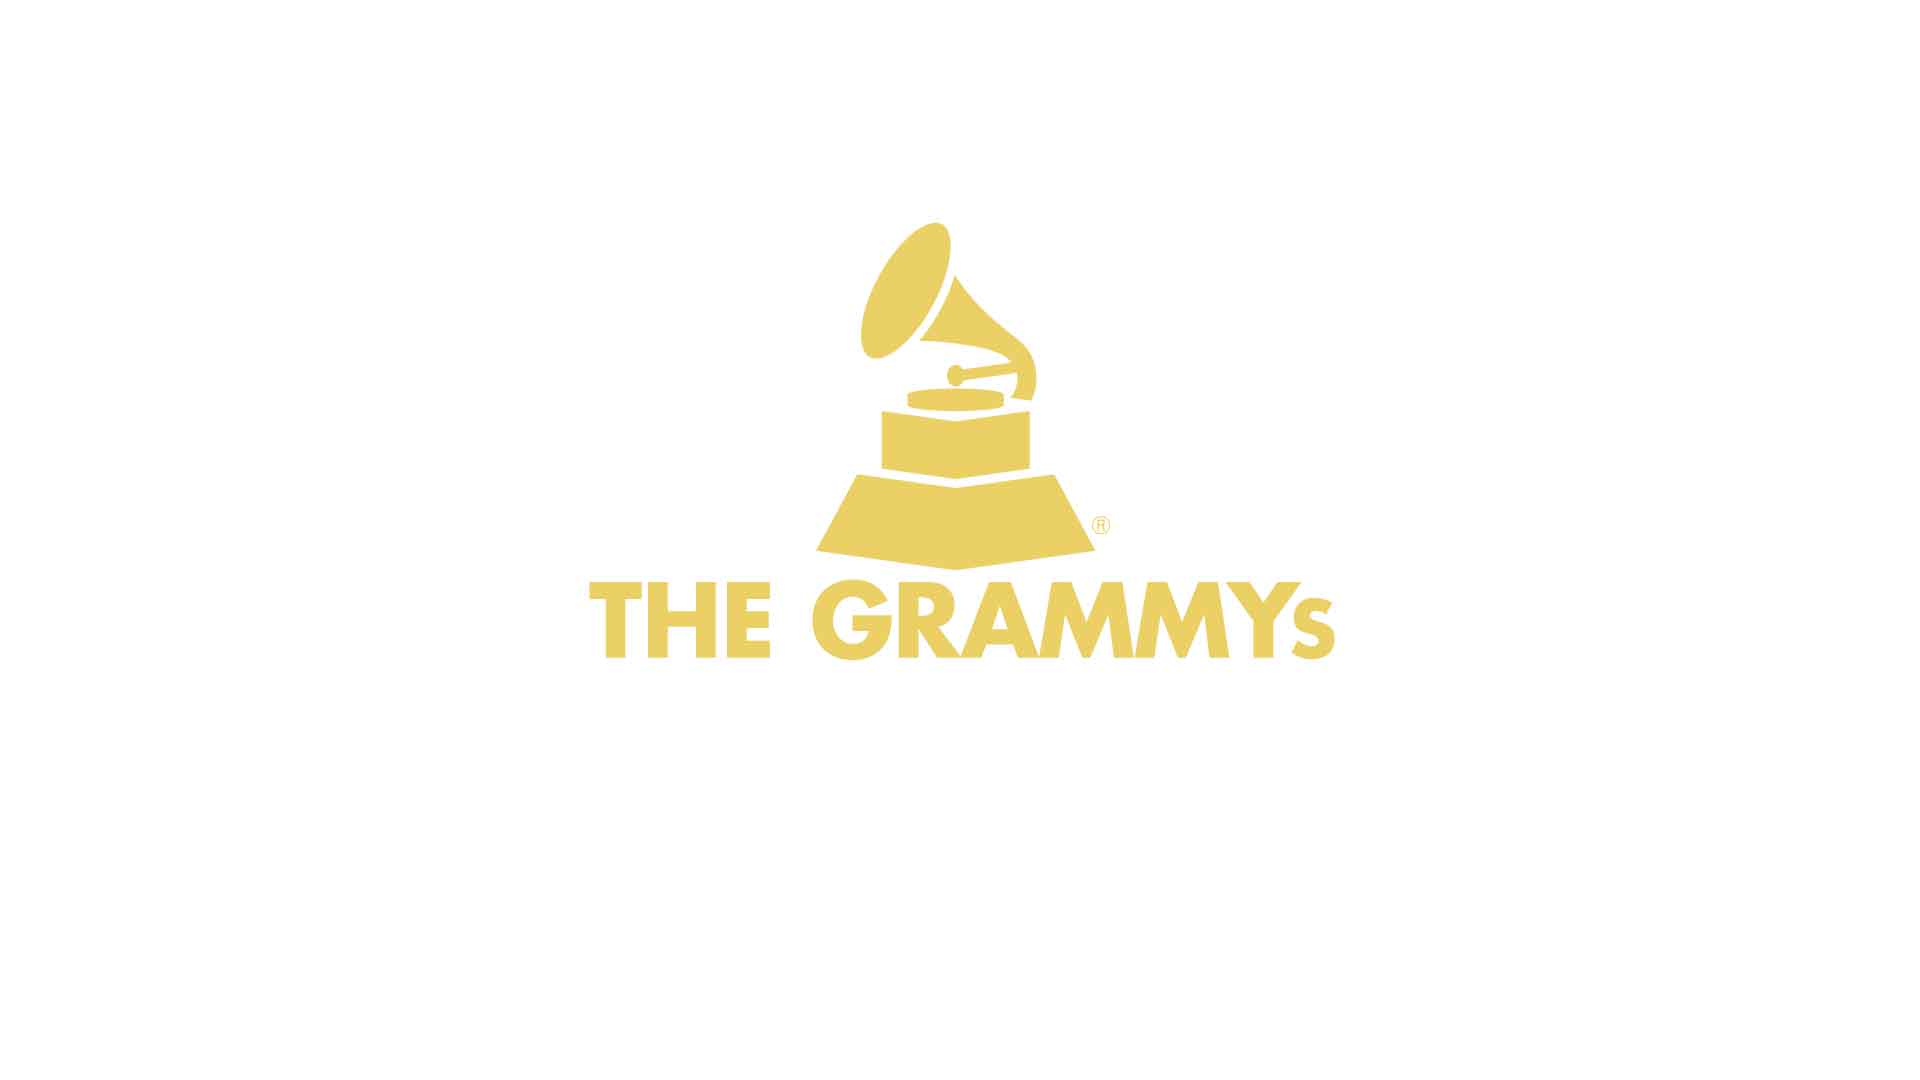 Grammys Wallpaper